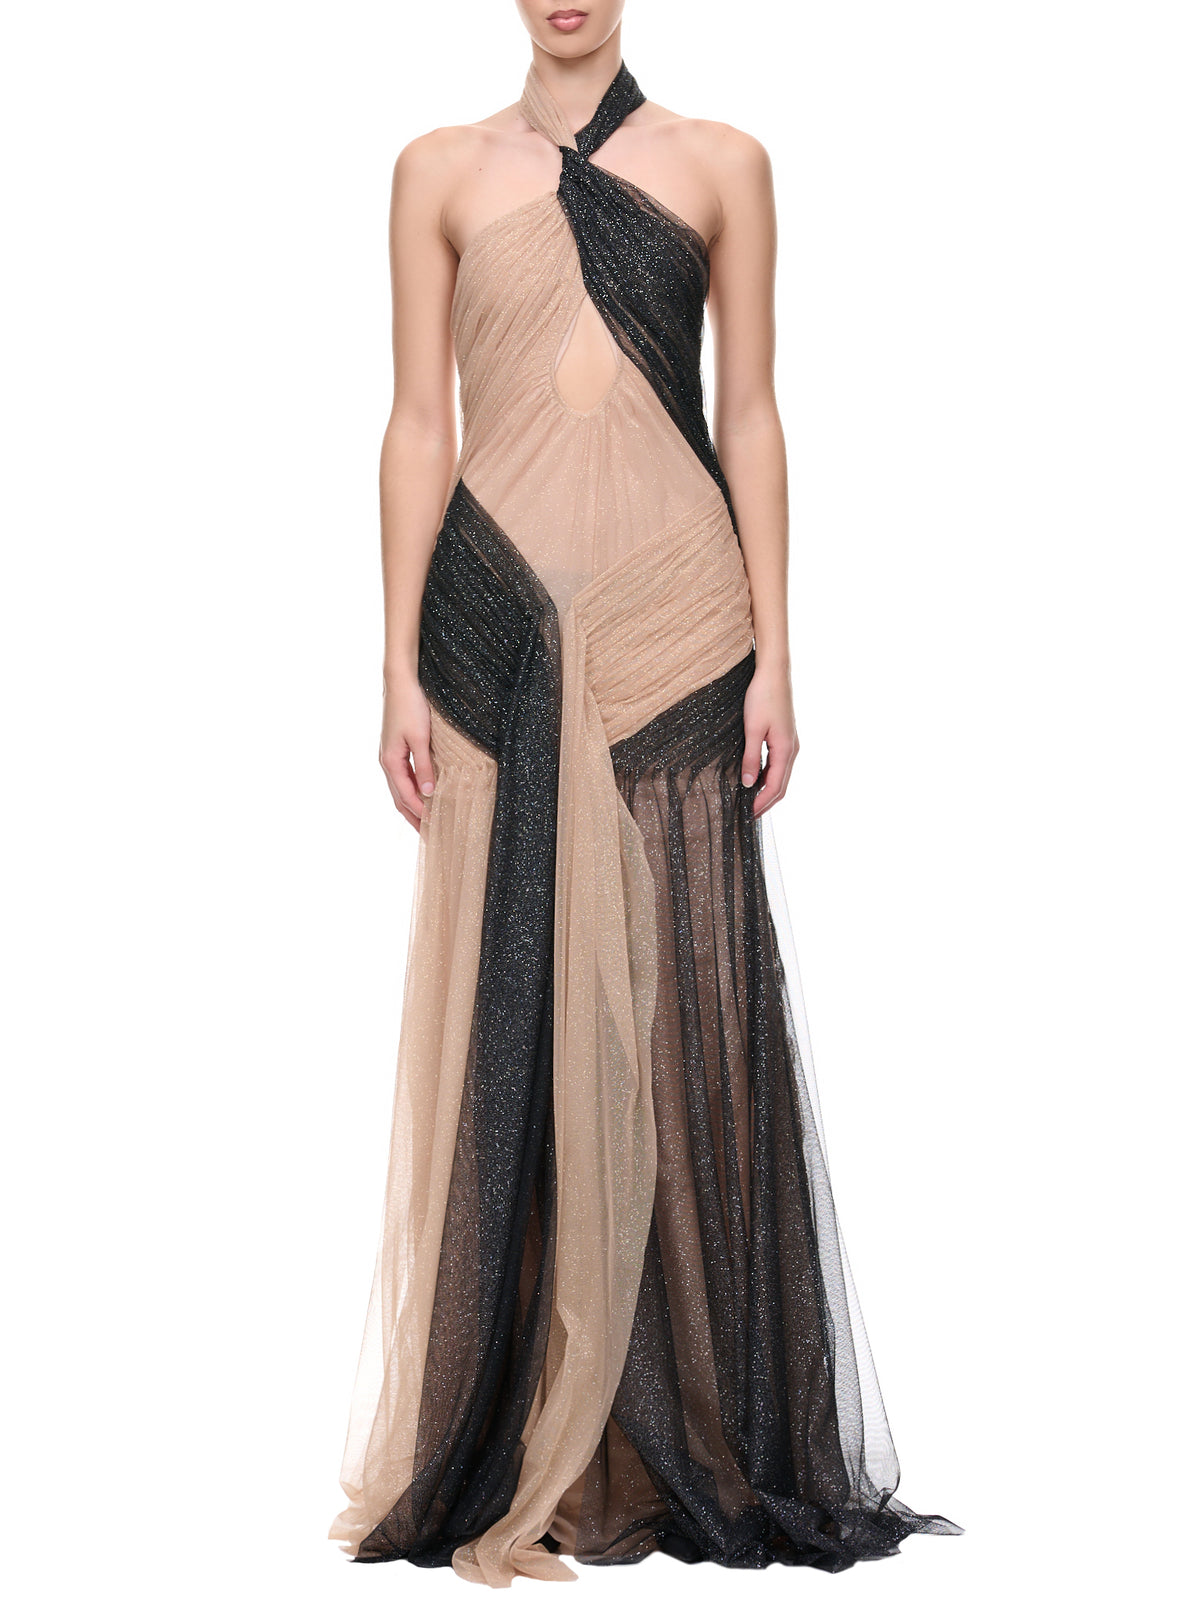 Glitter Block Dress (DR04-BEIGE-BLACK)